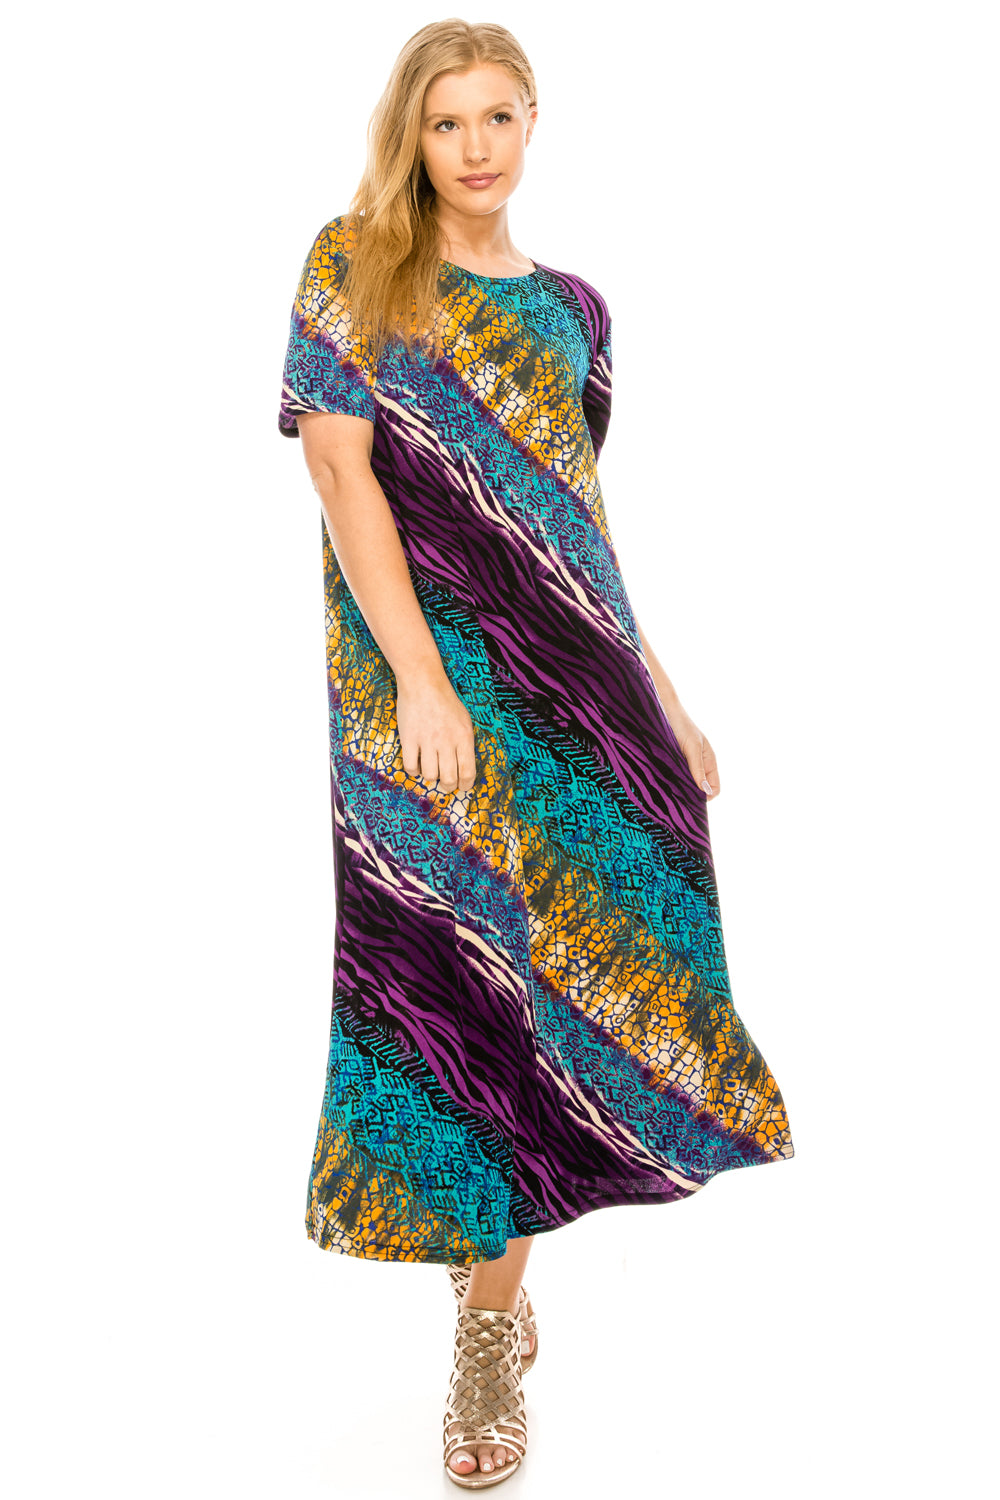 Jostar Women's Stretchy Long Dress Short Sleeve Plus Plus, 702BN-SXP-W182 - Jostar Online